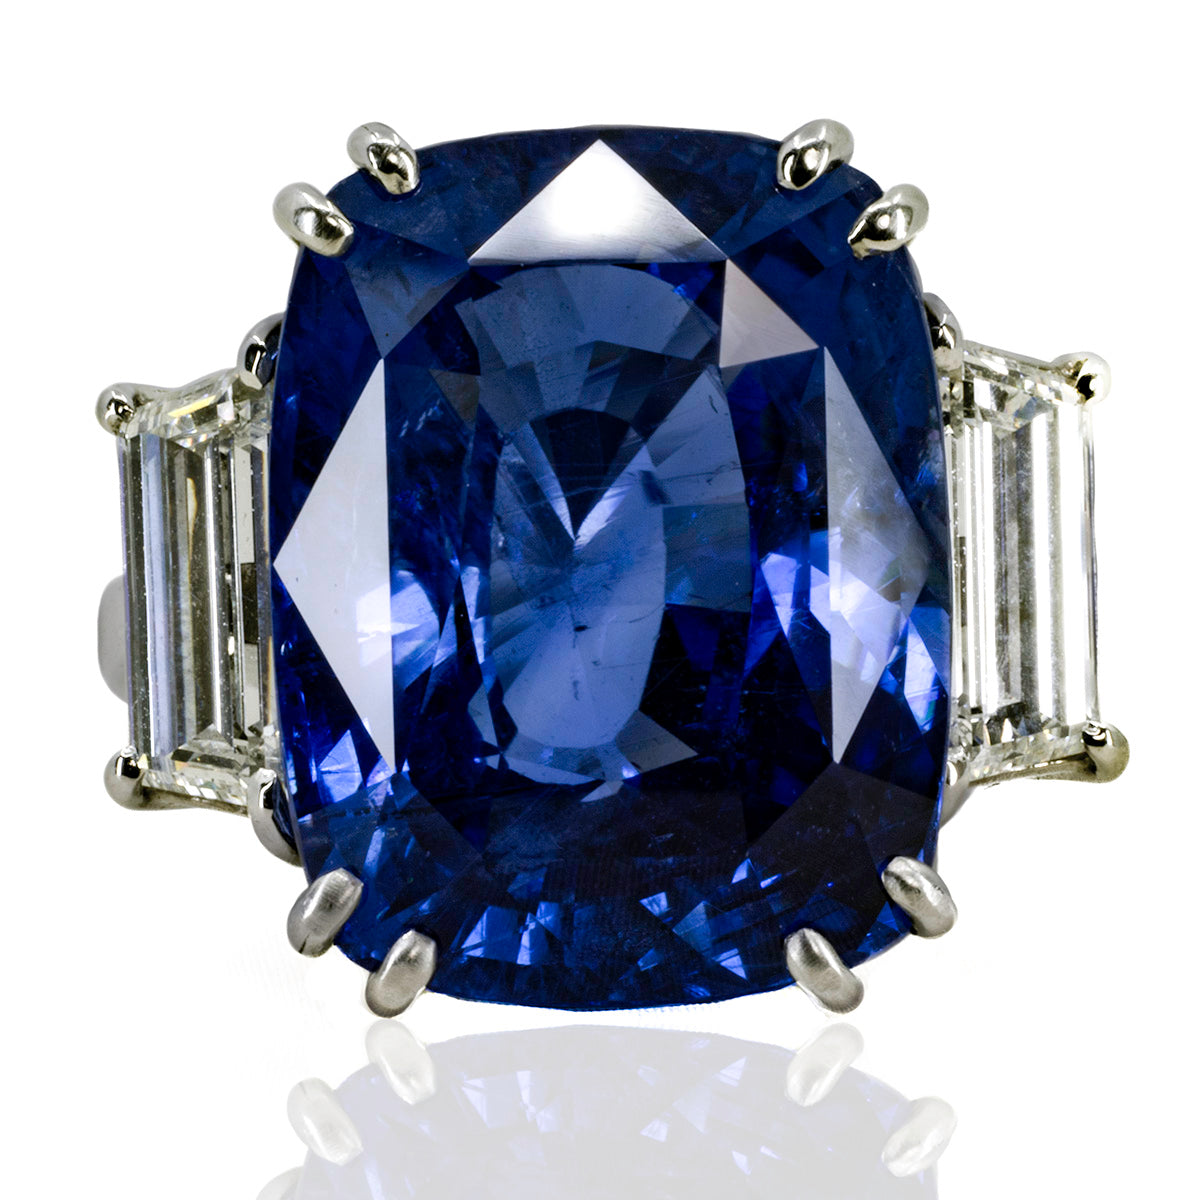 25 Carat Burma Sapphire Ring